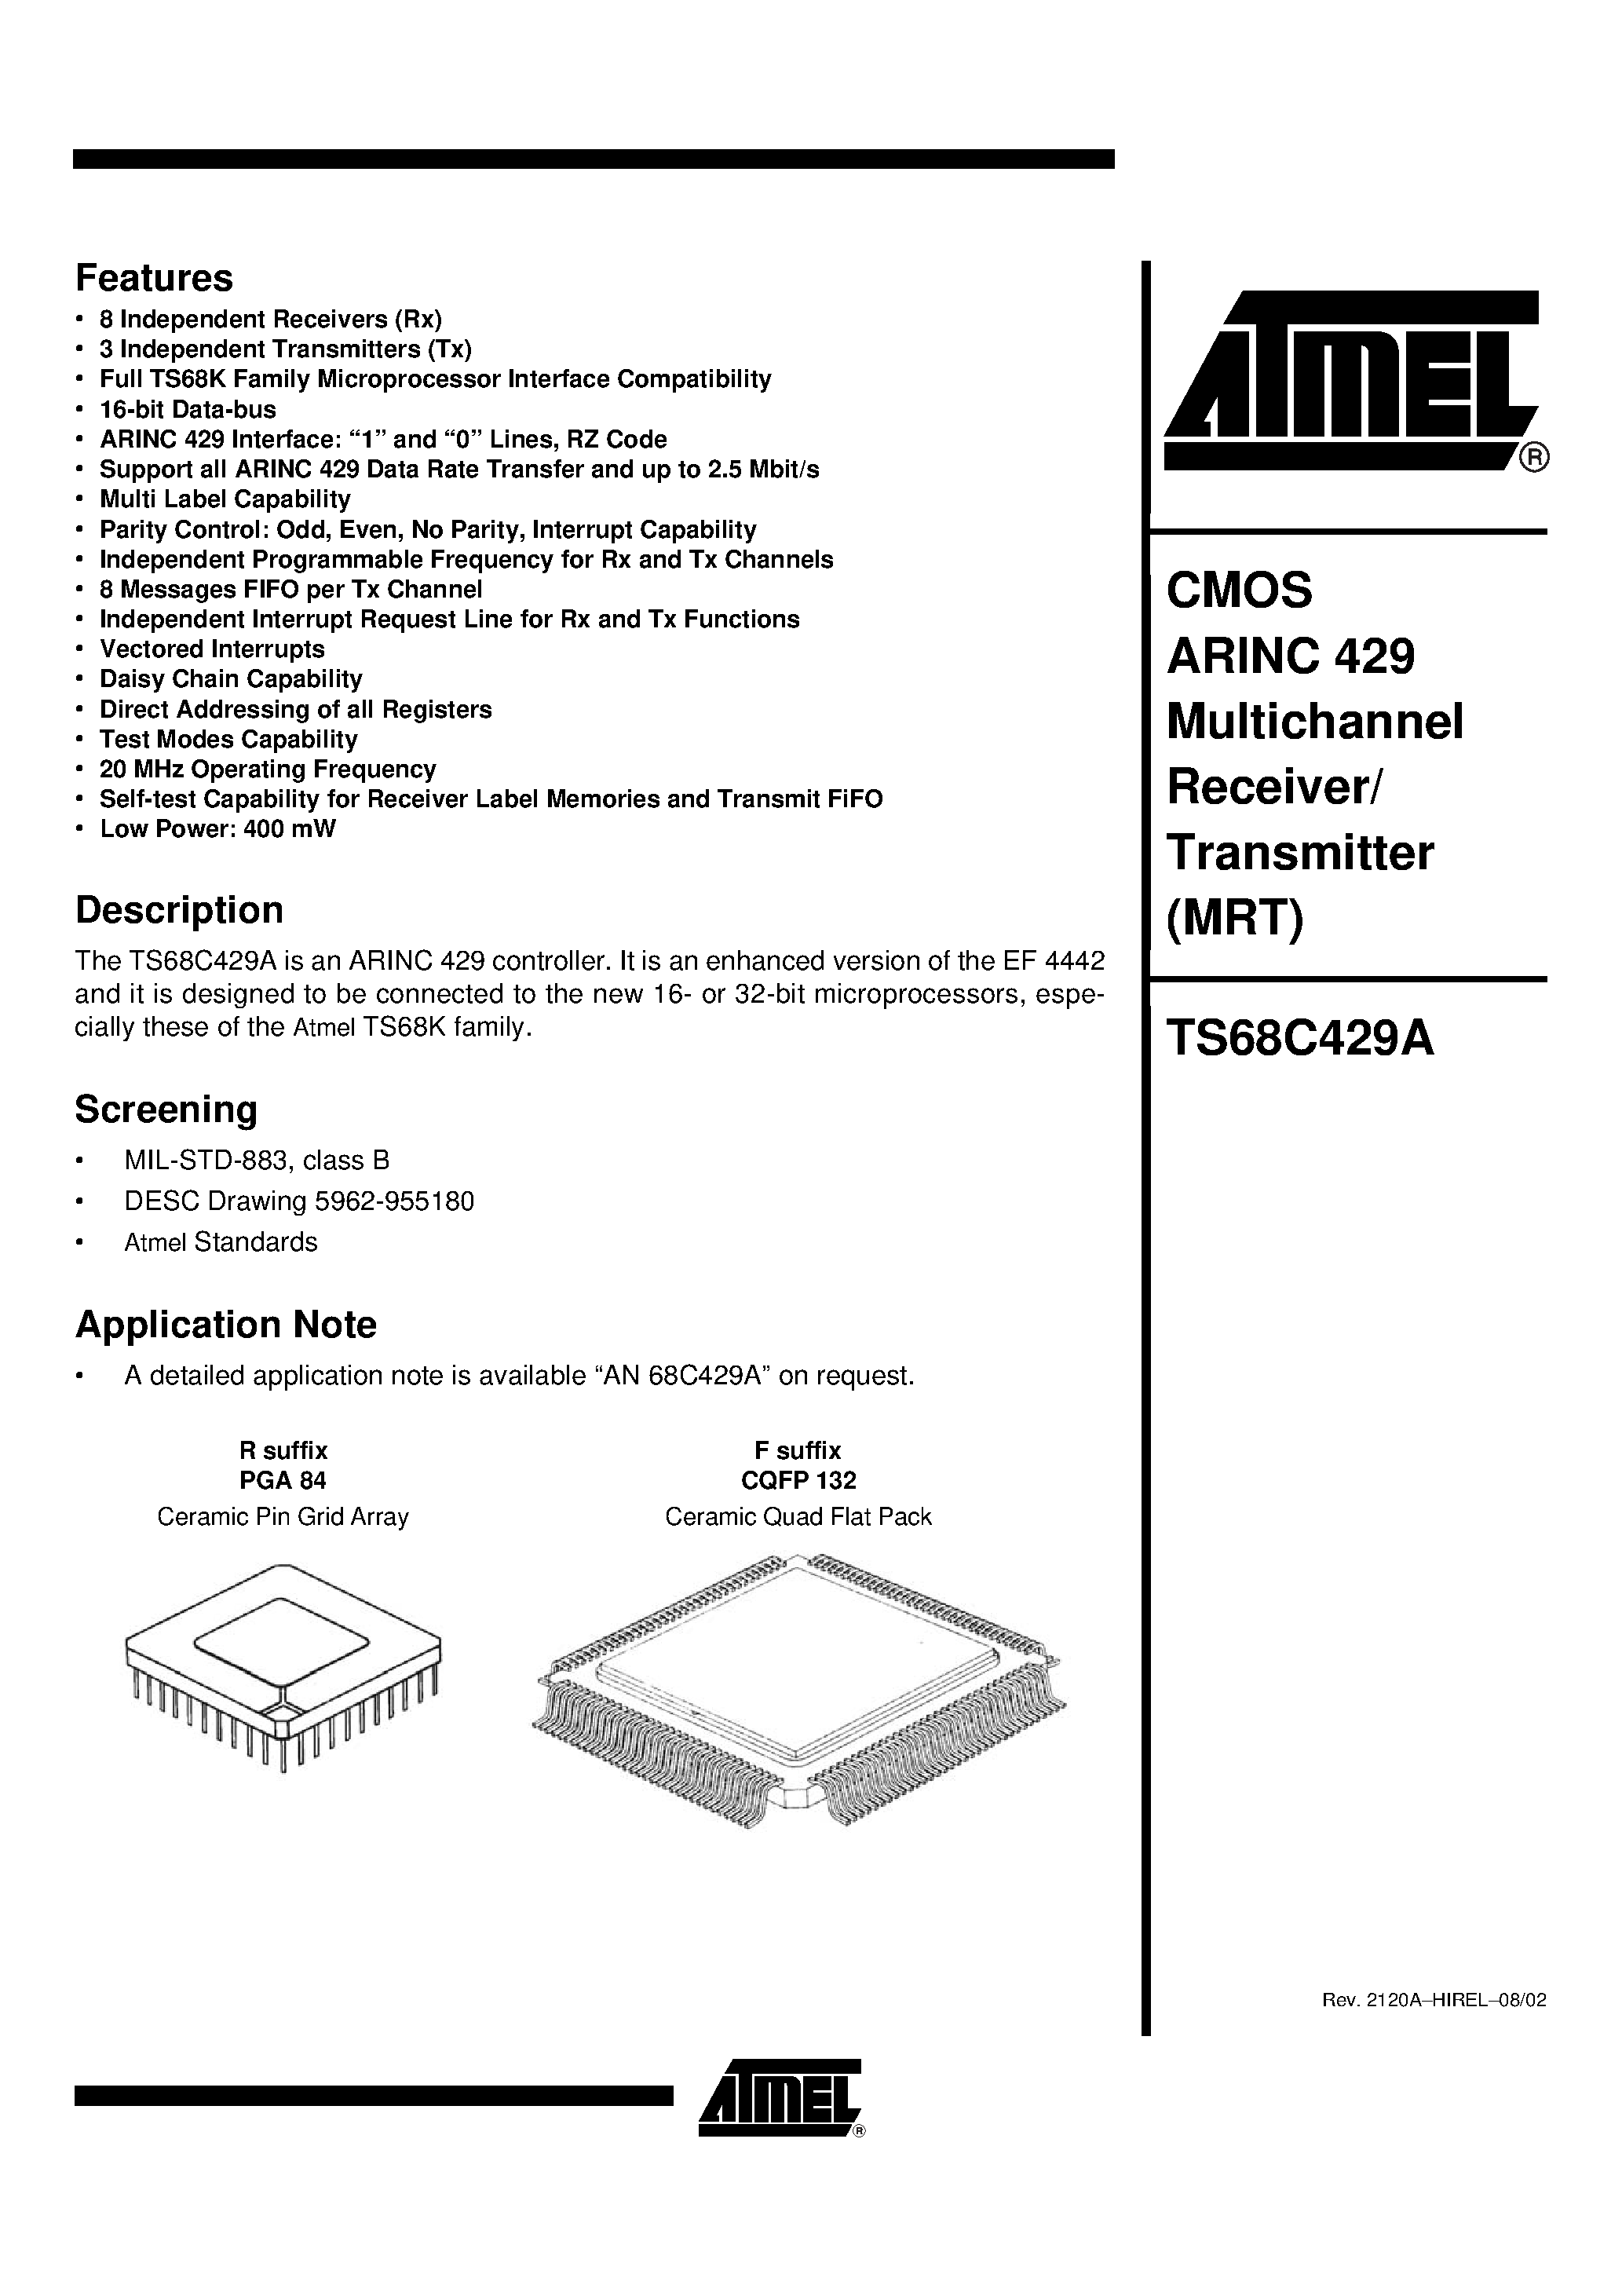 Datasheet TS68C429AMFB/C - CMOS ARINC 429 Multichannel Receiver/ Transmitter MRT page 1